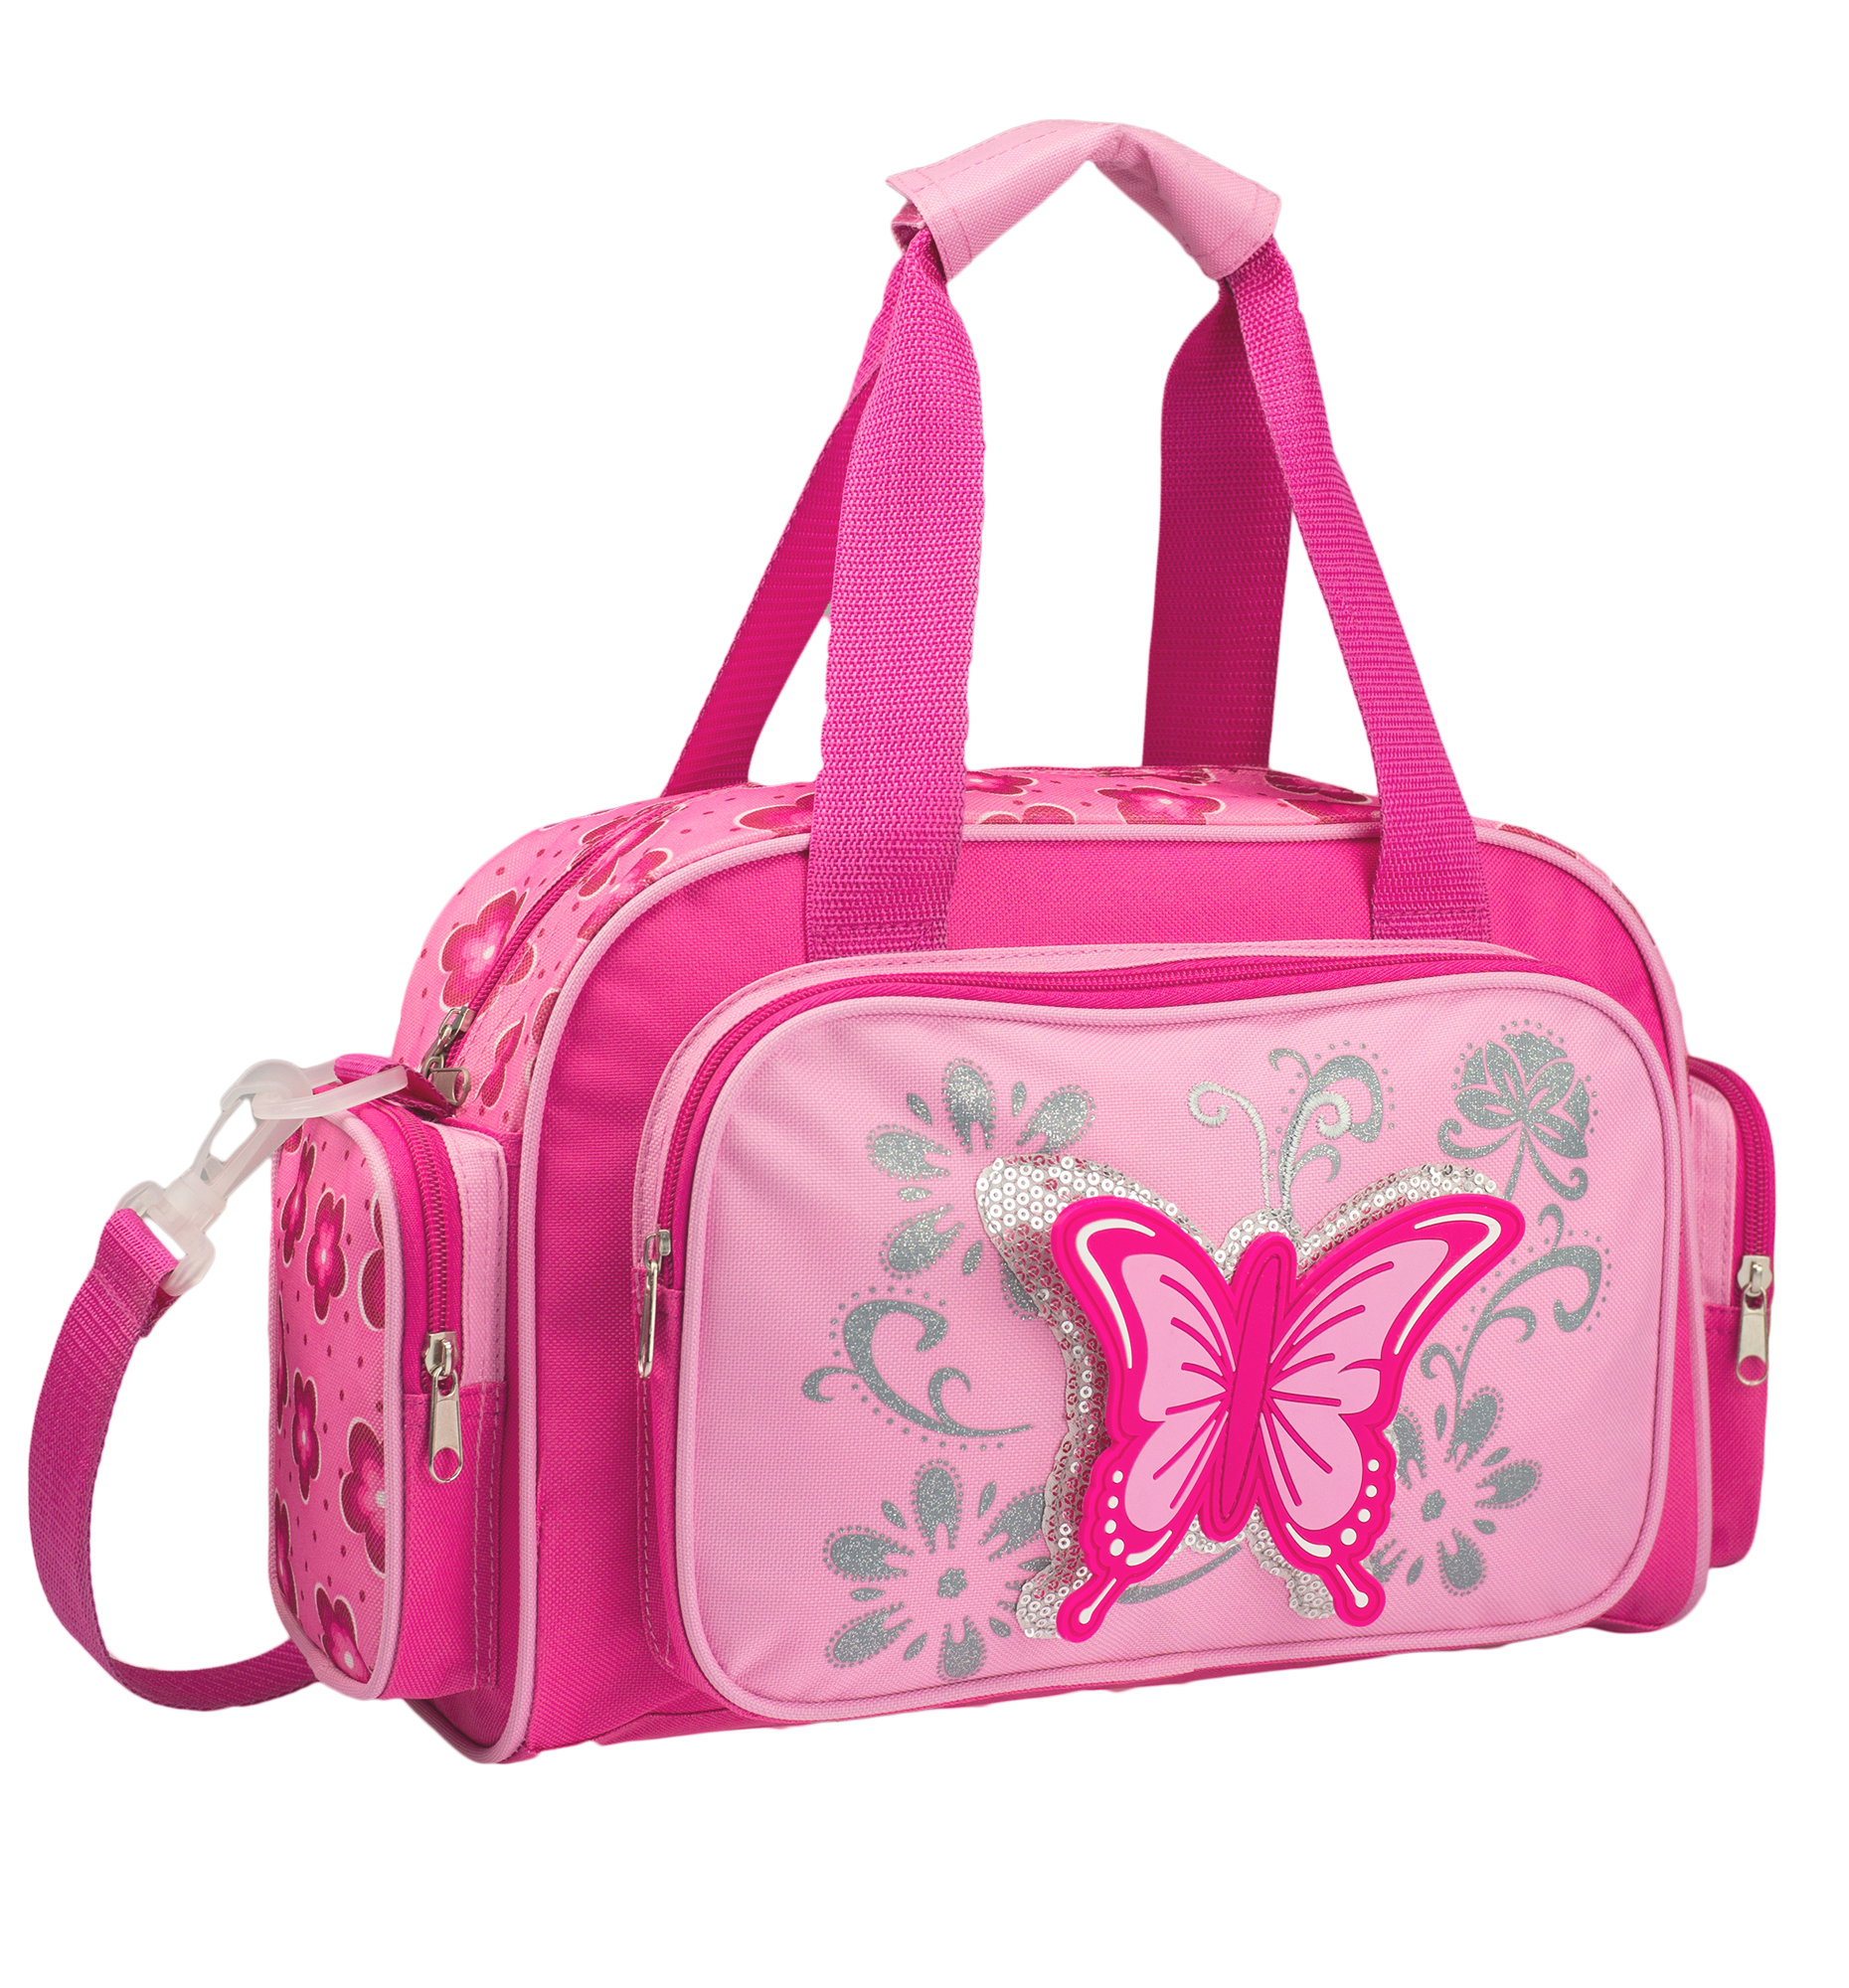 Kindergartentasche "Schmetterling" in pink - 1923-100-80